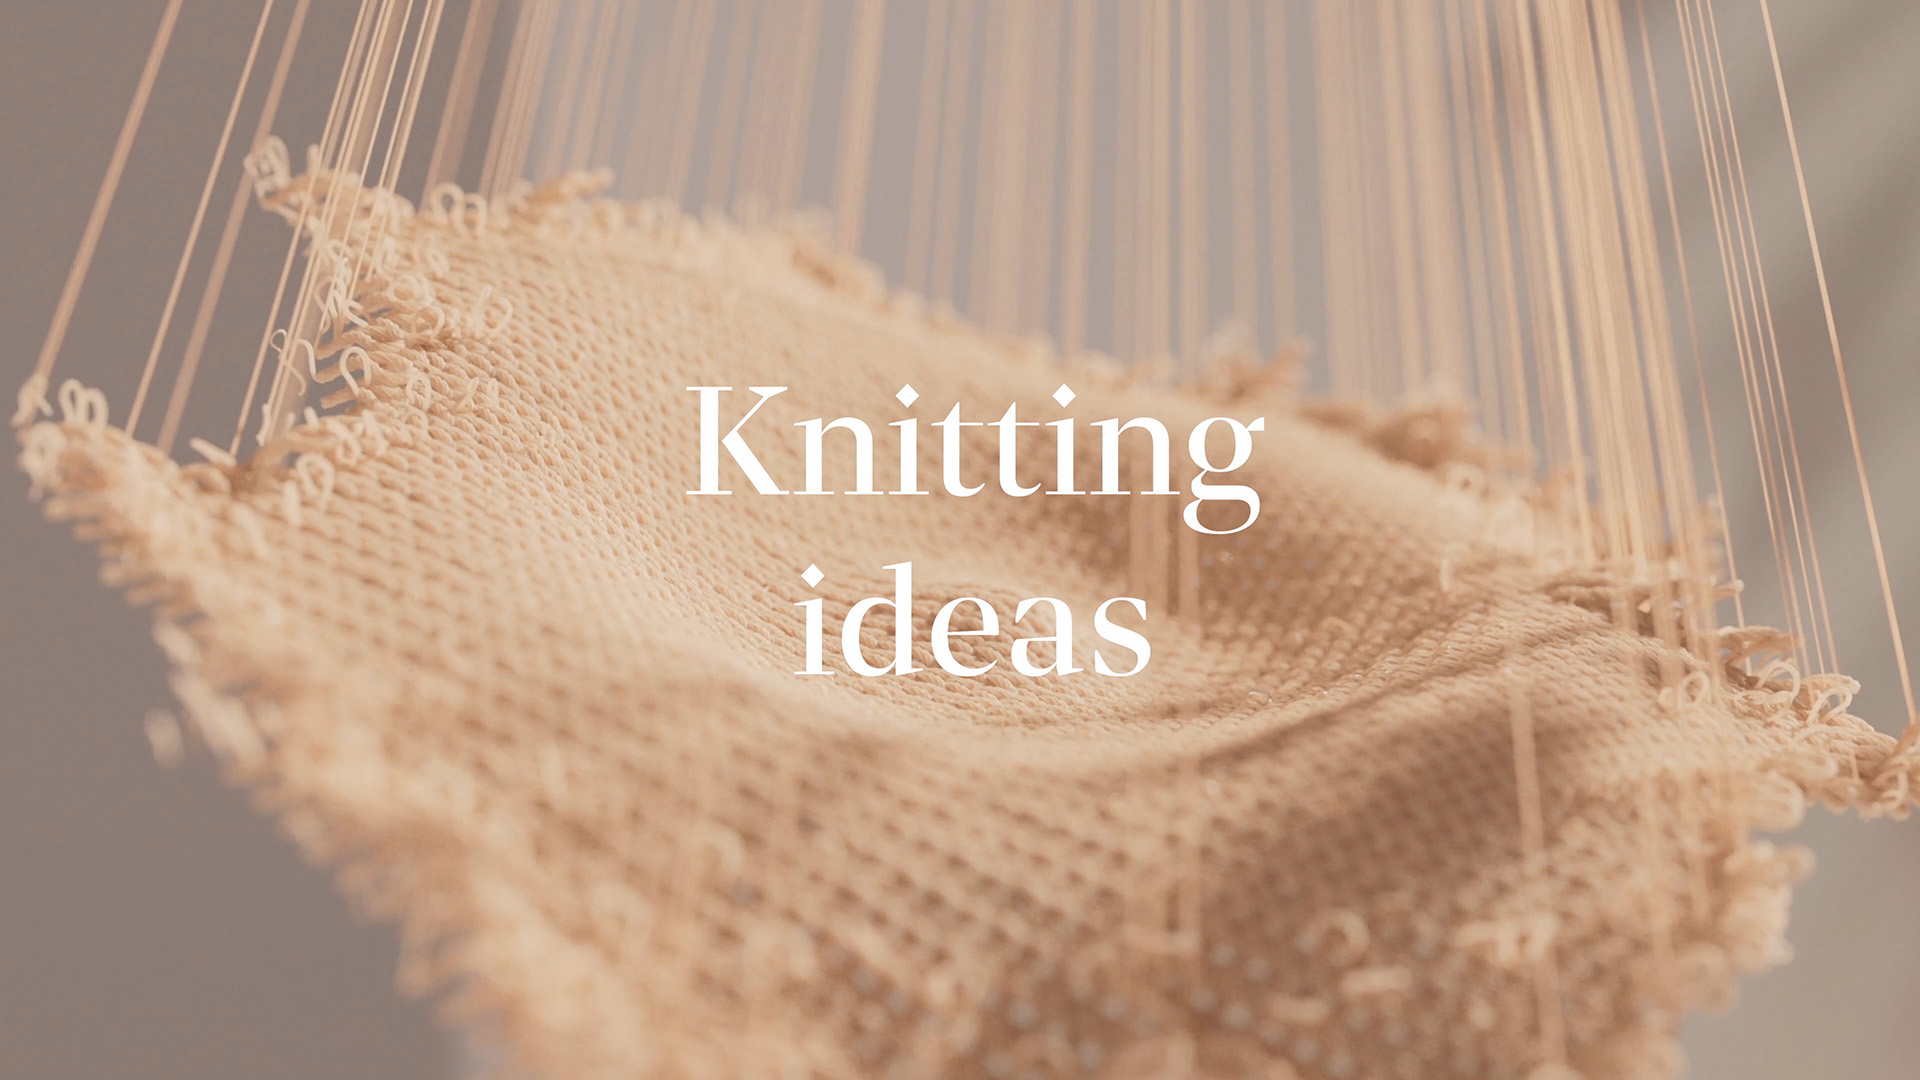 Saudi Arabia knitting detail video launch for Saudi Arabian traditional company  